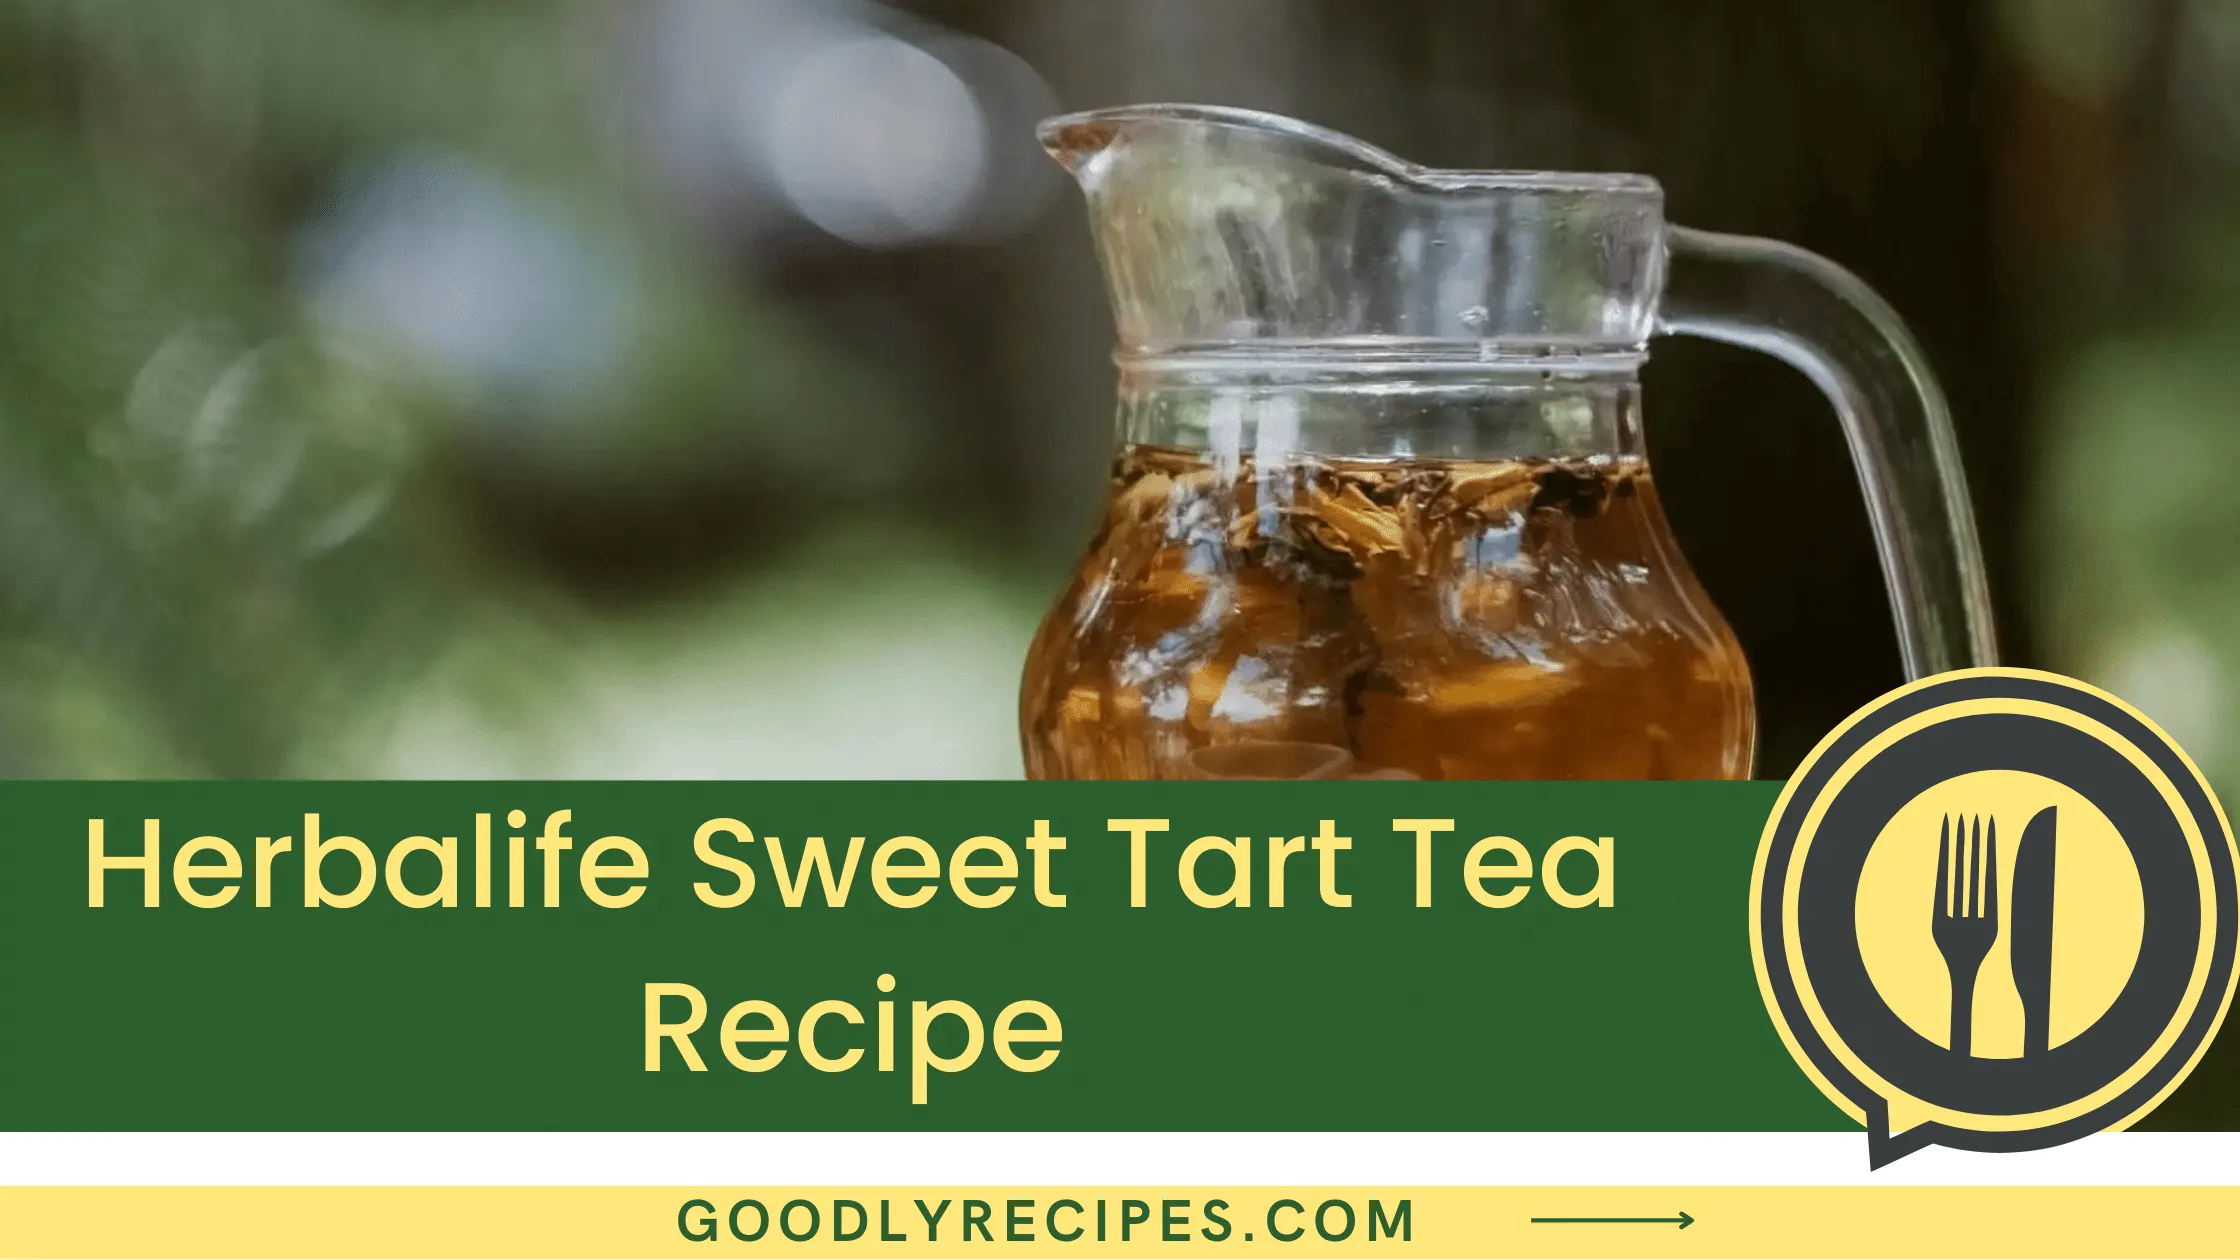 Herbalife Sweet Tart Tea Recipe